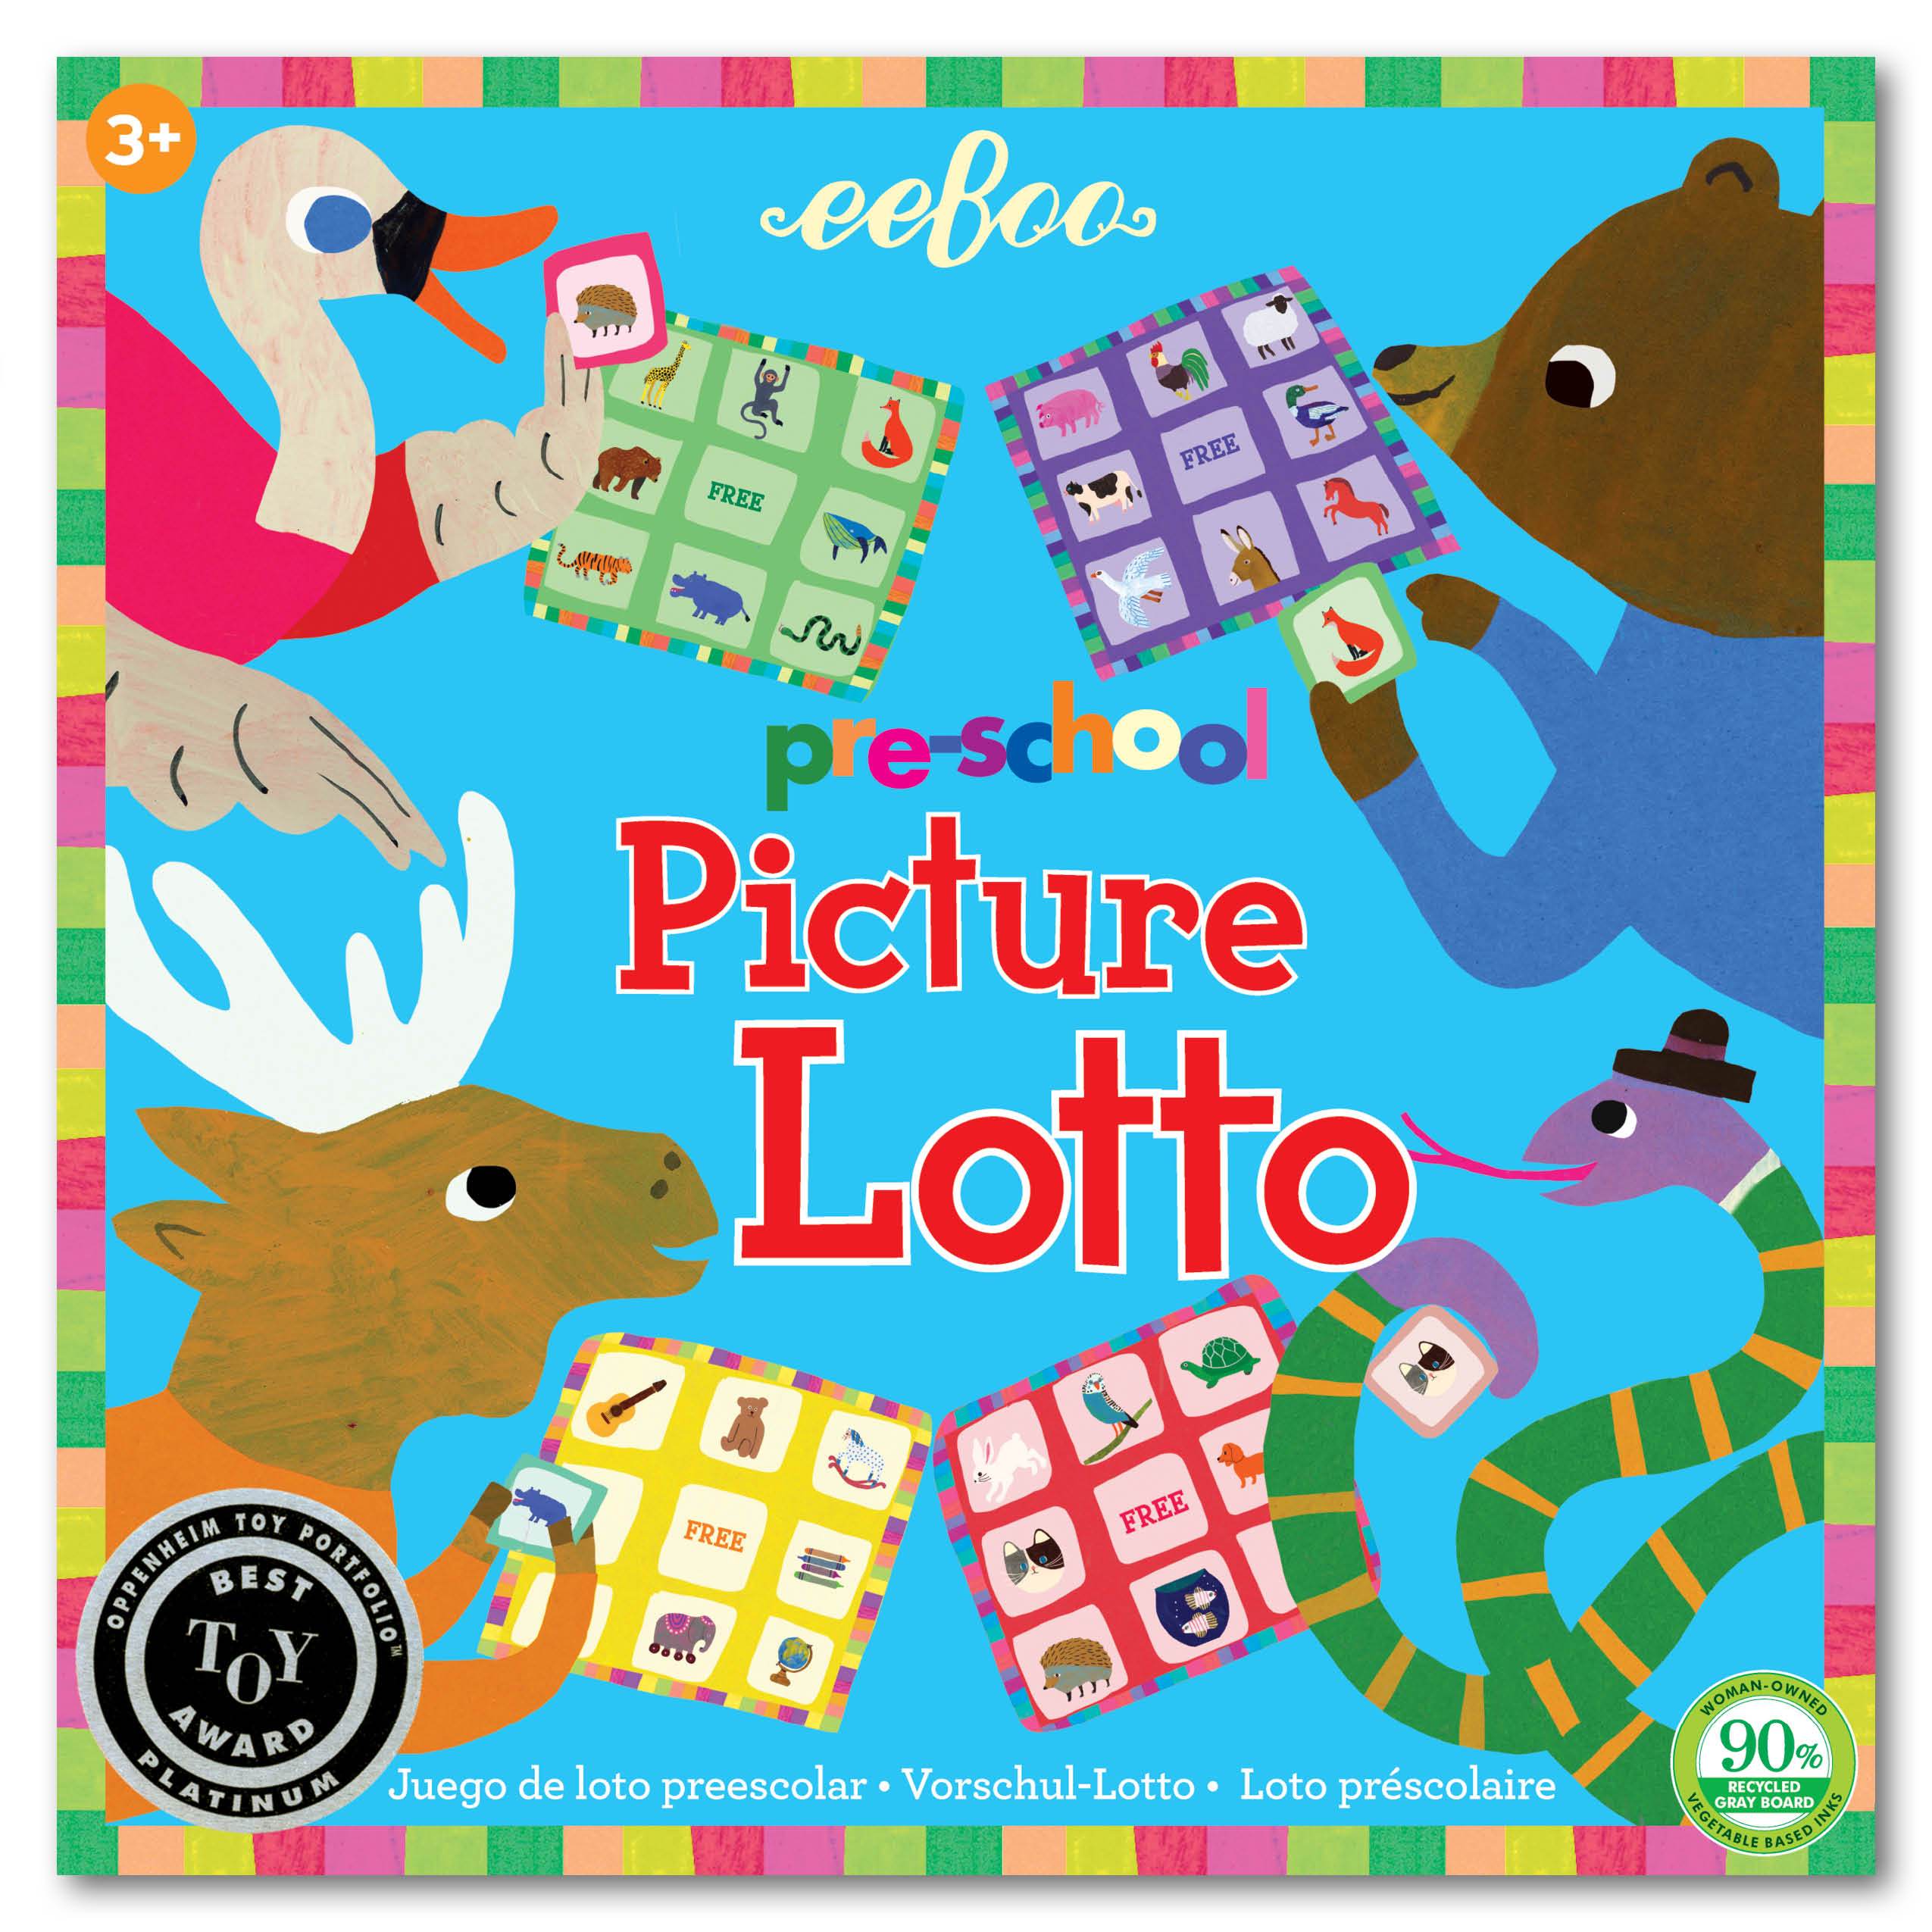 Pre-School Picture Lotto Kaboodles Toy Store - Victoria